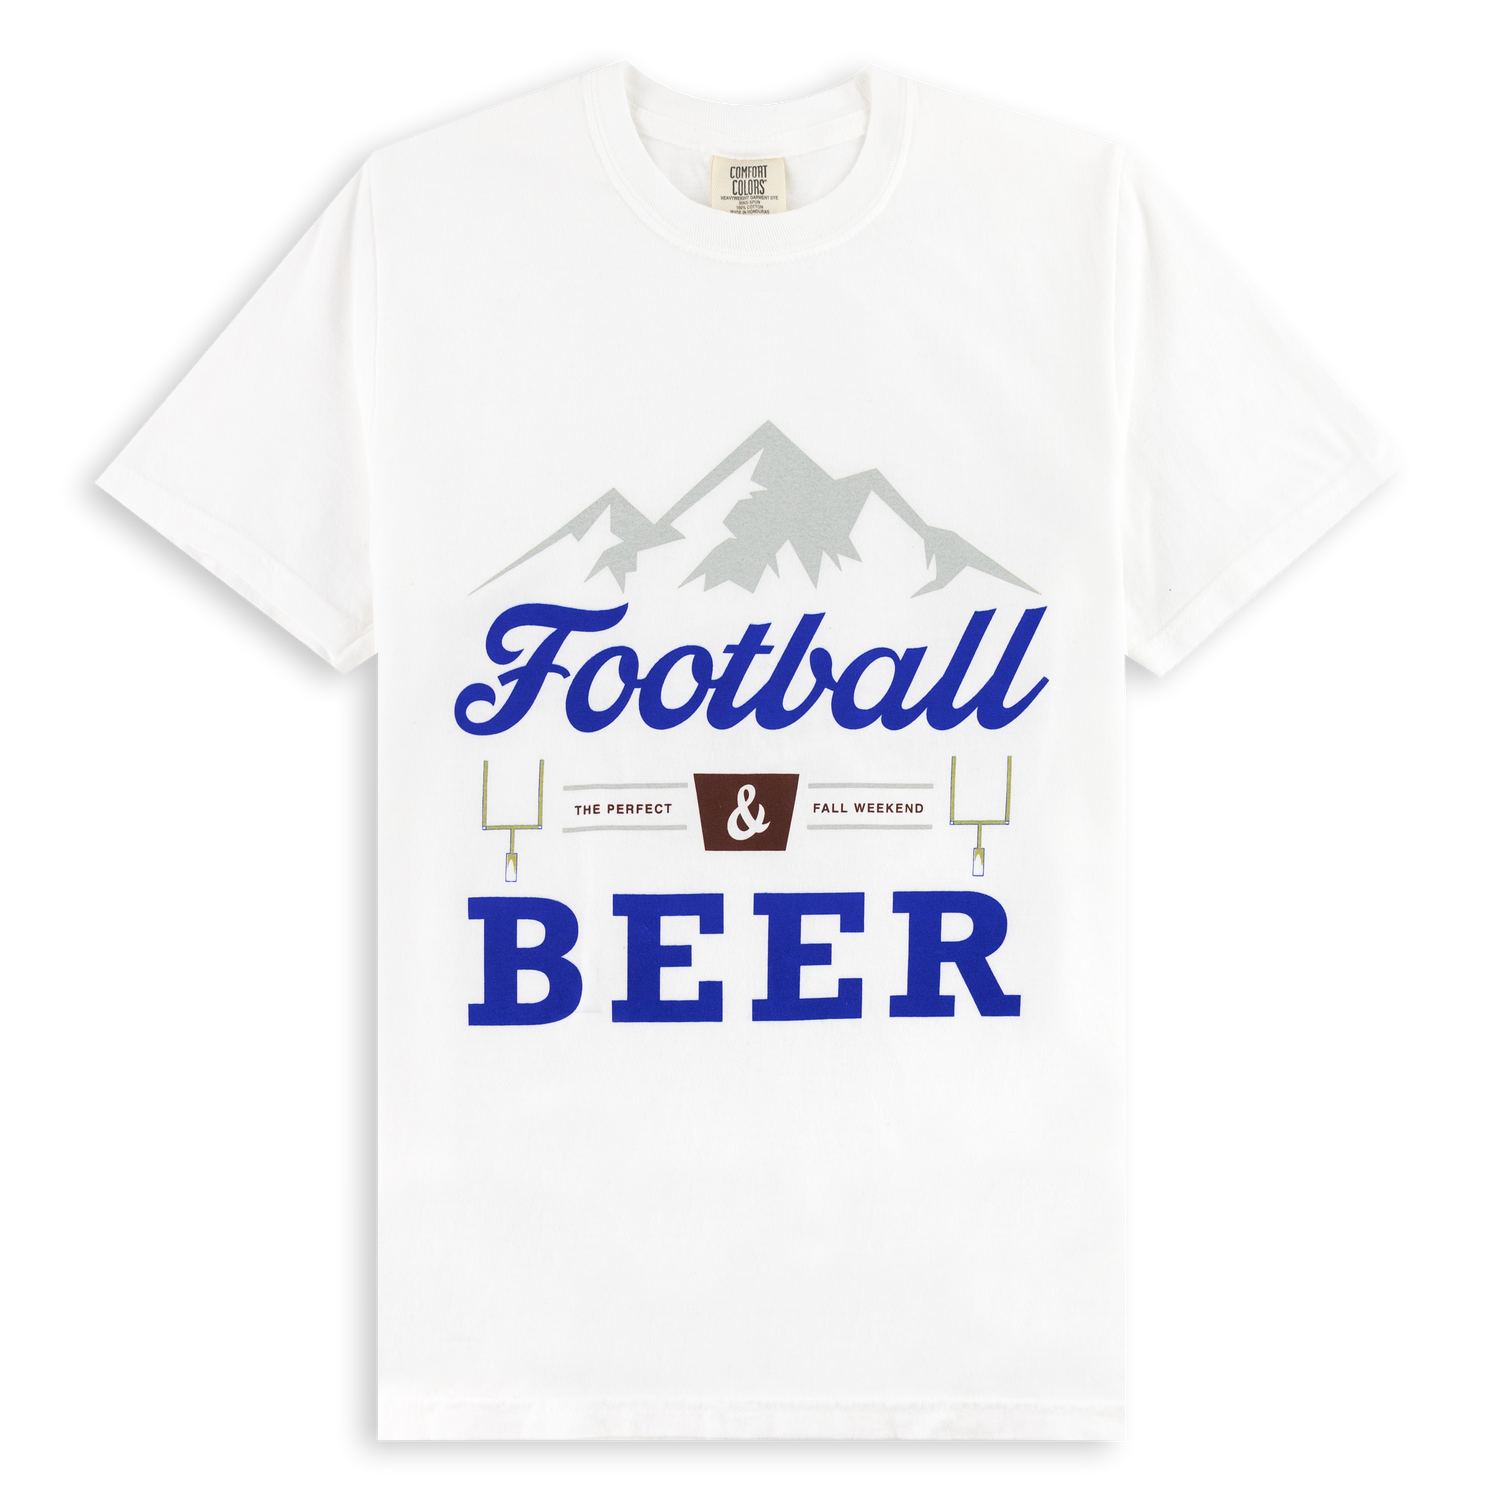 Football & Beer T-Shirt